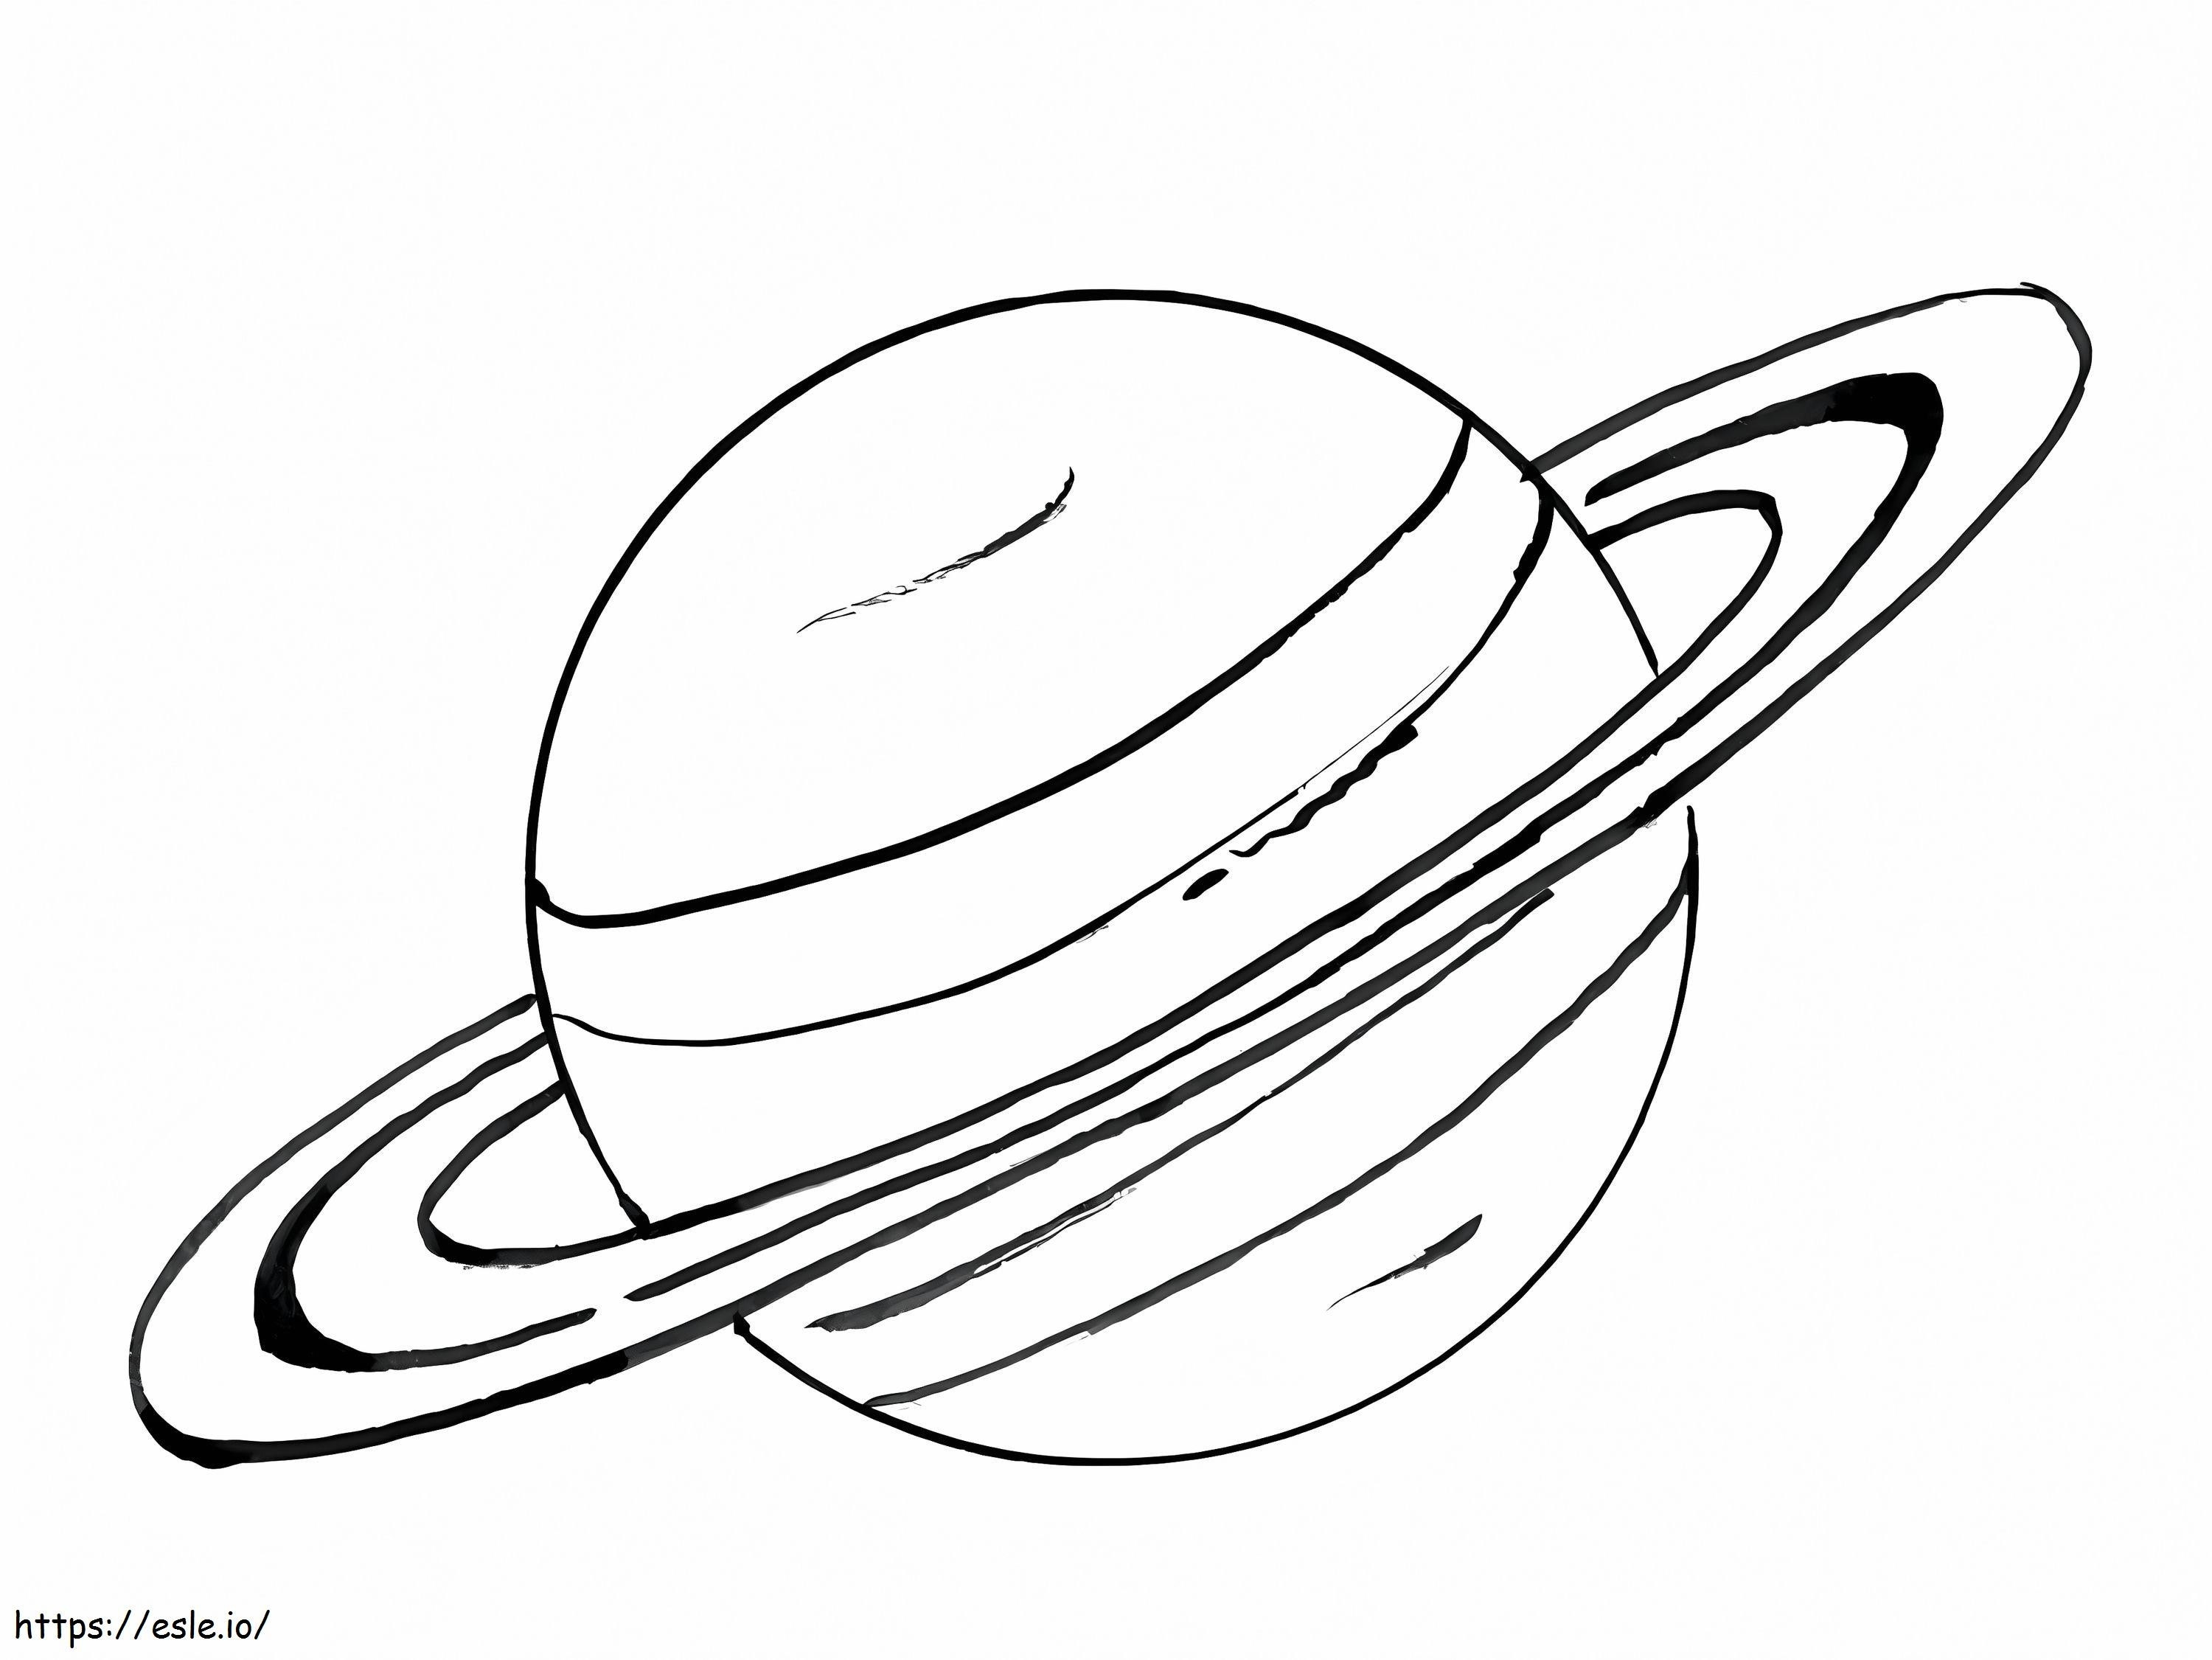 Coloriage Saturne 2 à imprimer dessin